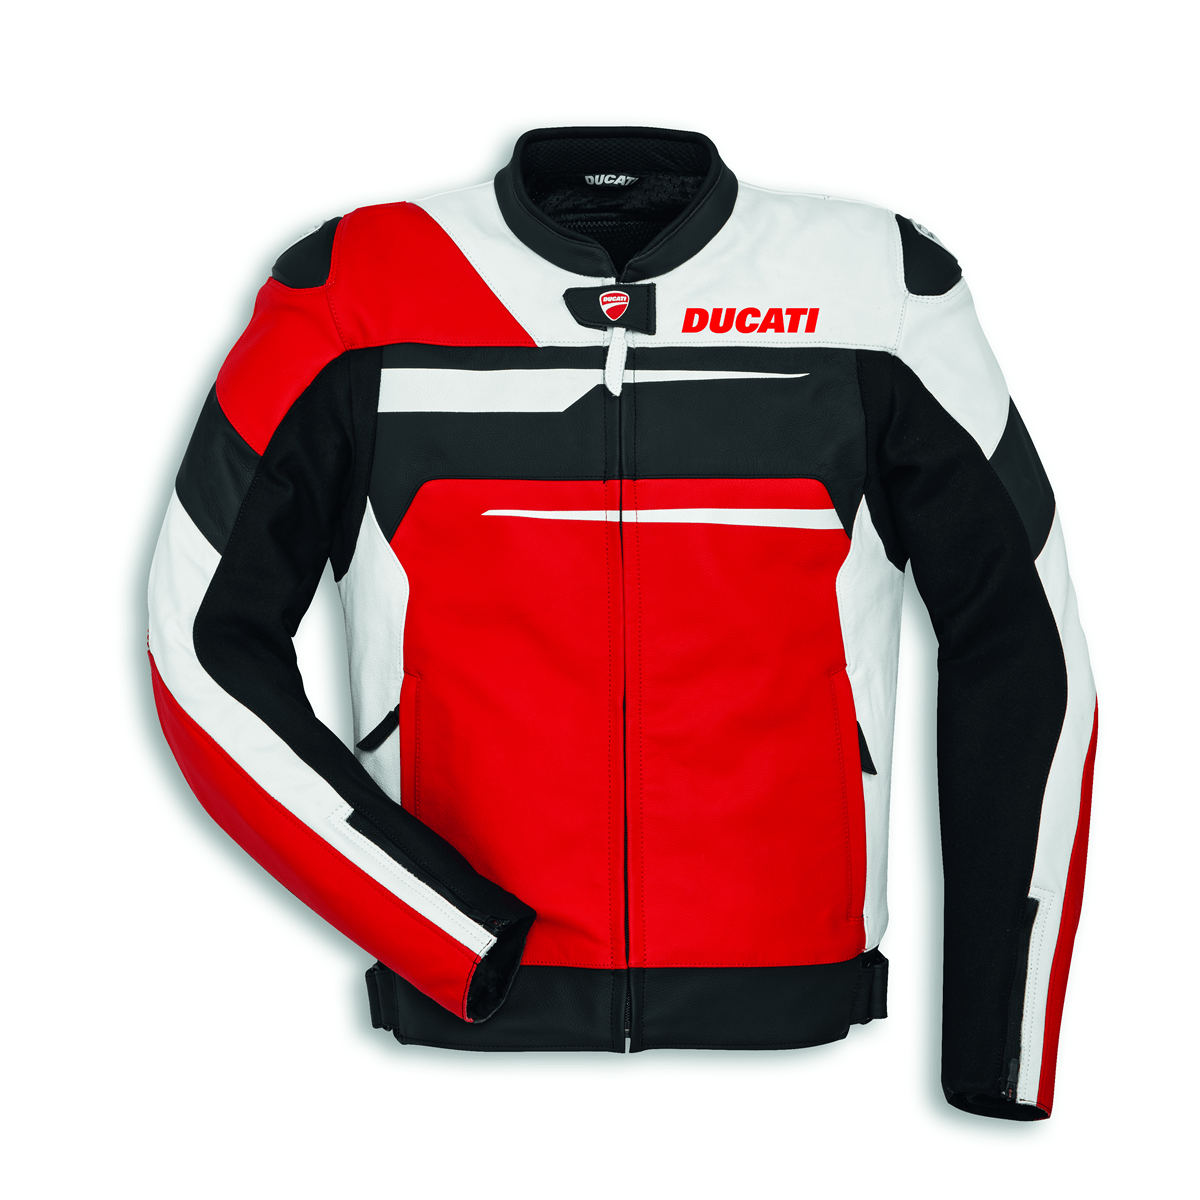 Ducati 2018 Apparel Range Preview - ZA Bikers